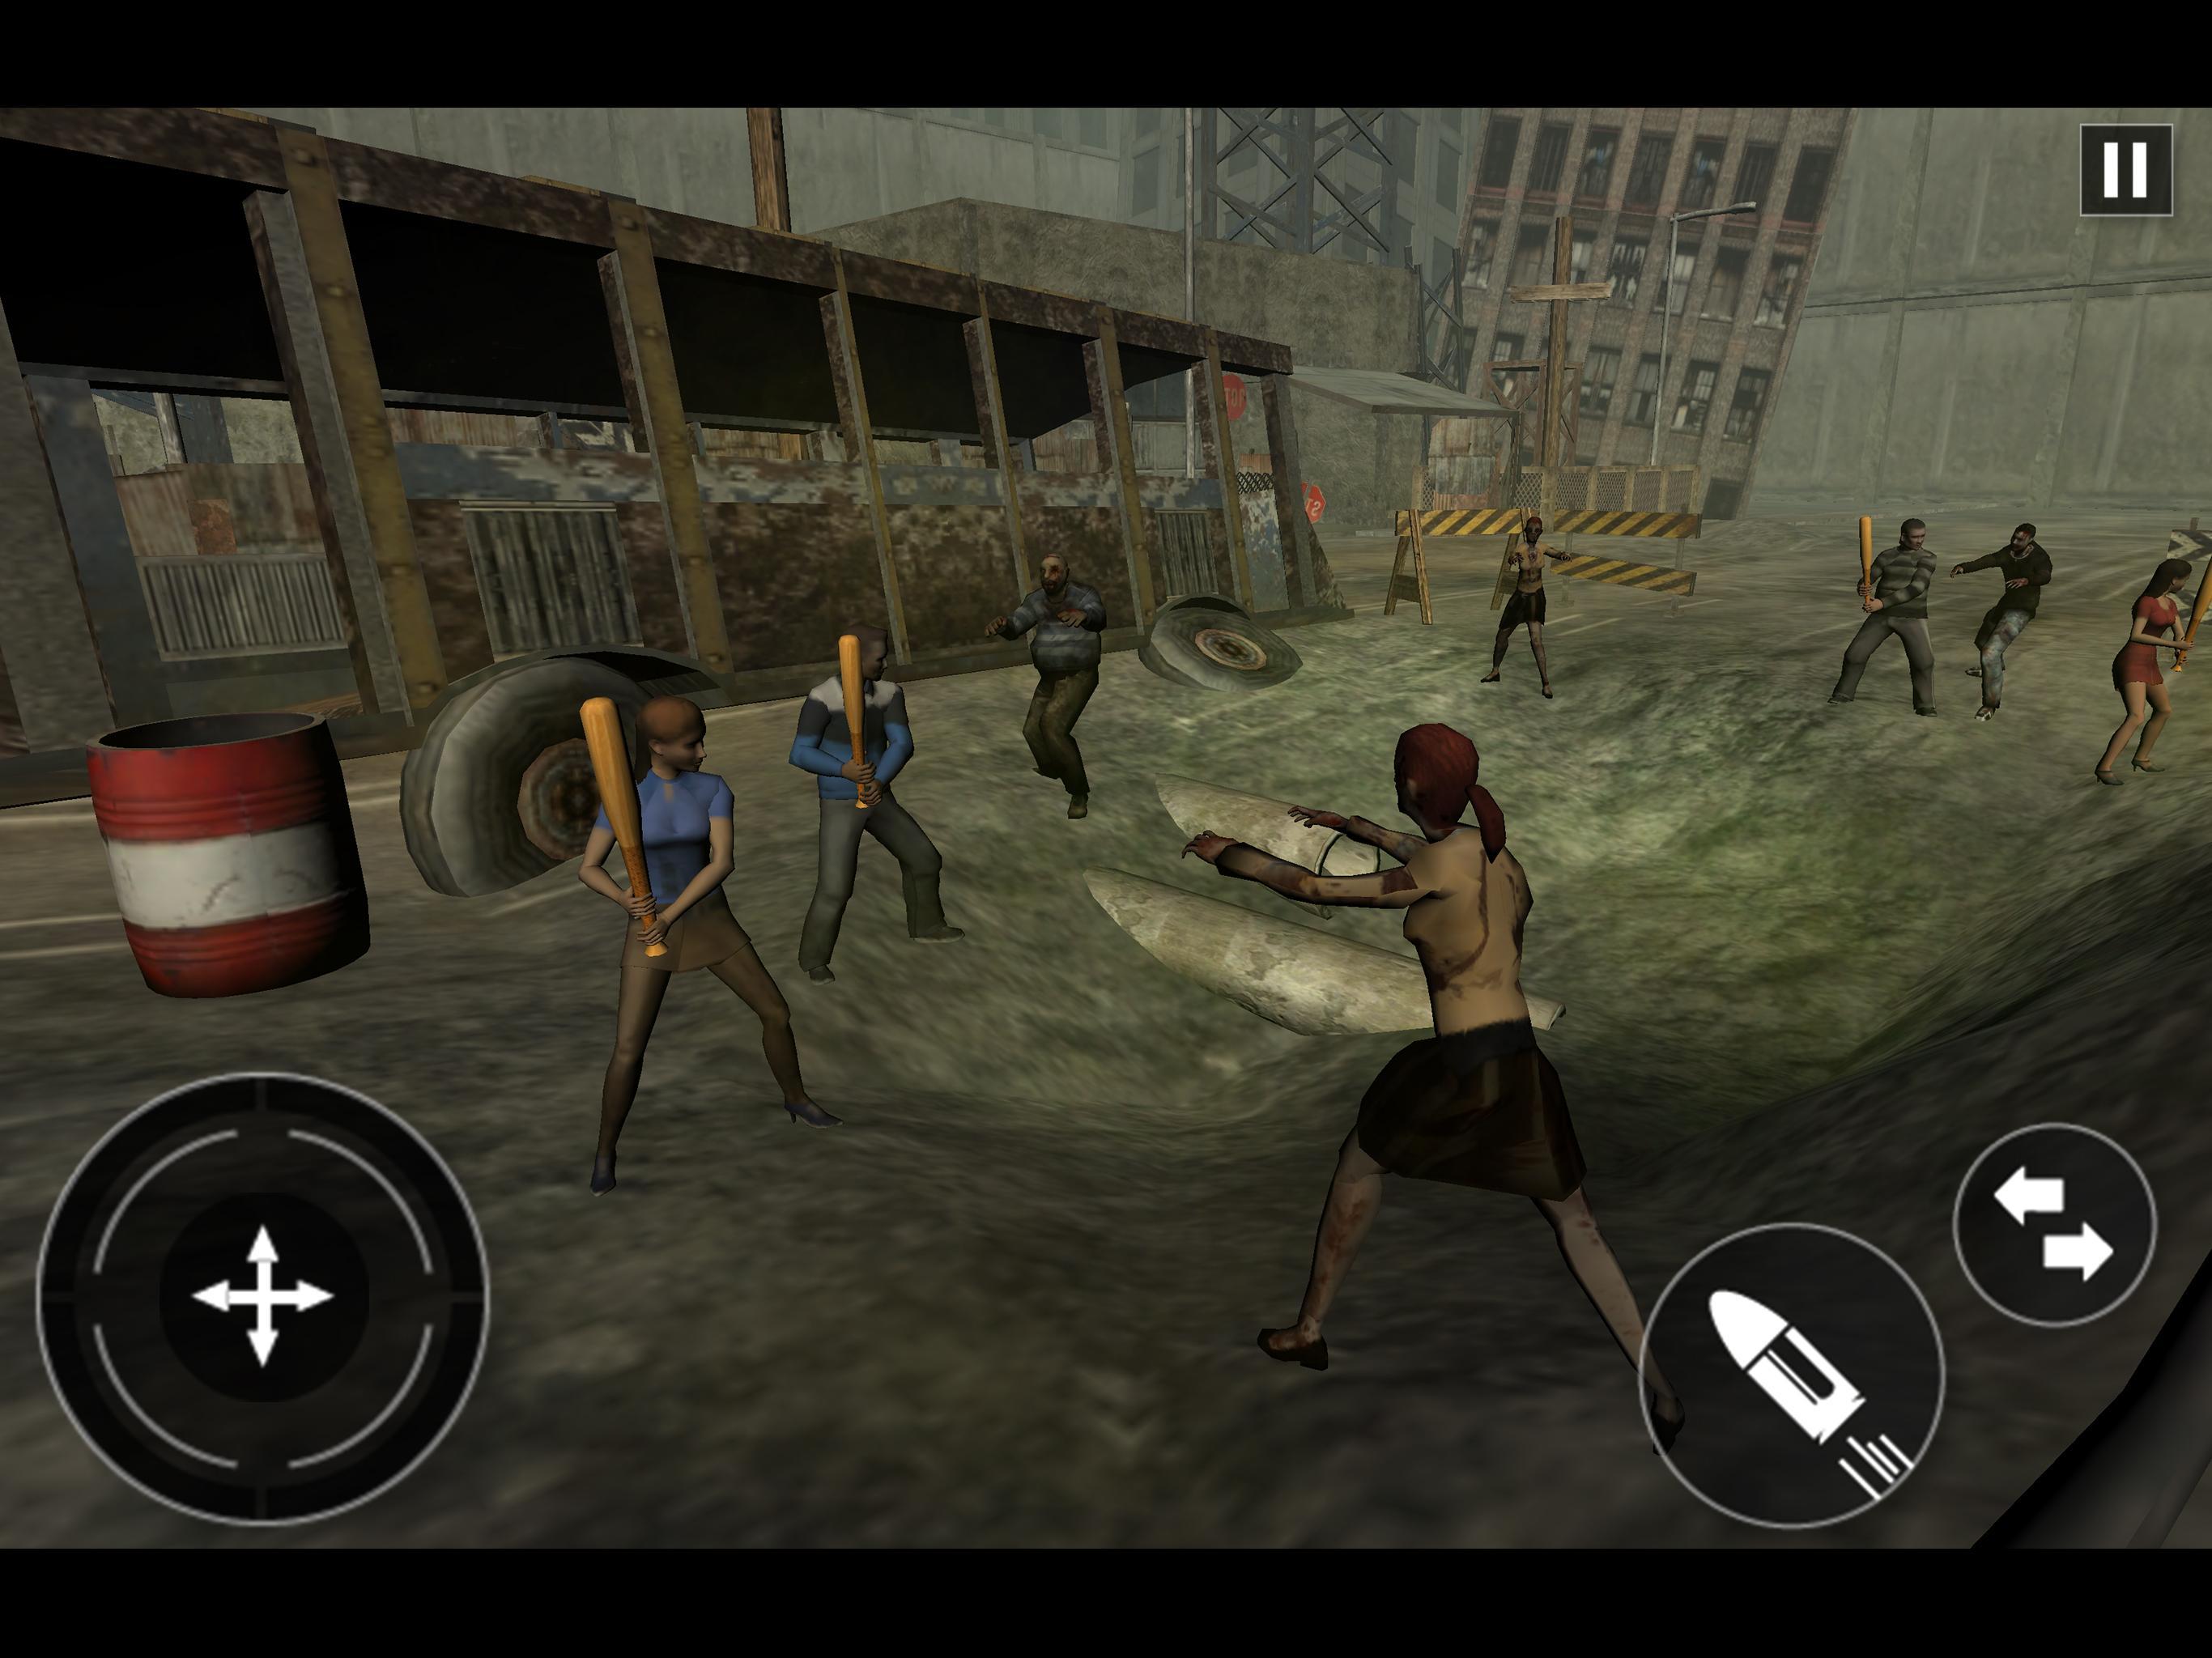 Afk zombie apocalypse game global. Симулятор зомби апокалипсиса. Симулятор зомби апокалипсиса на андроид.